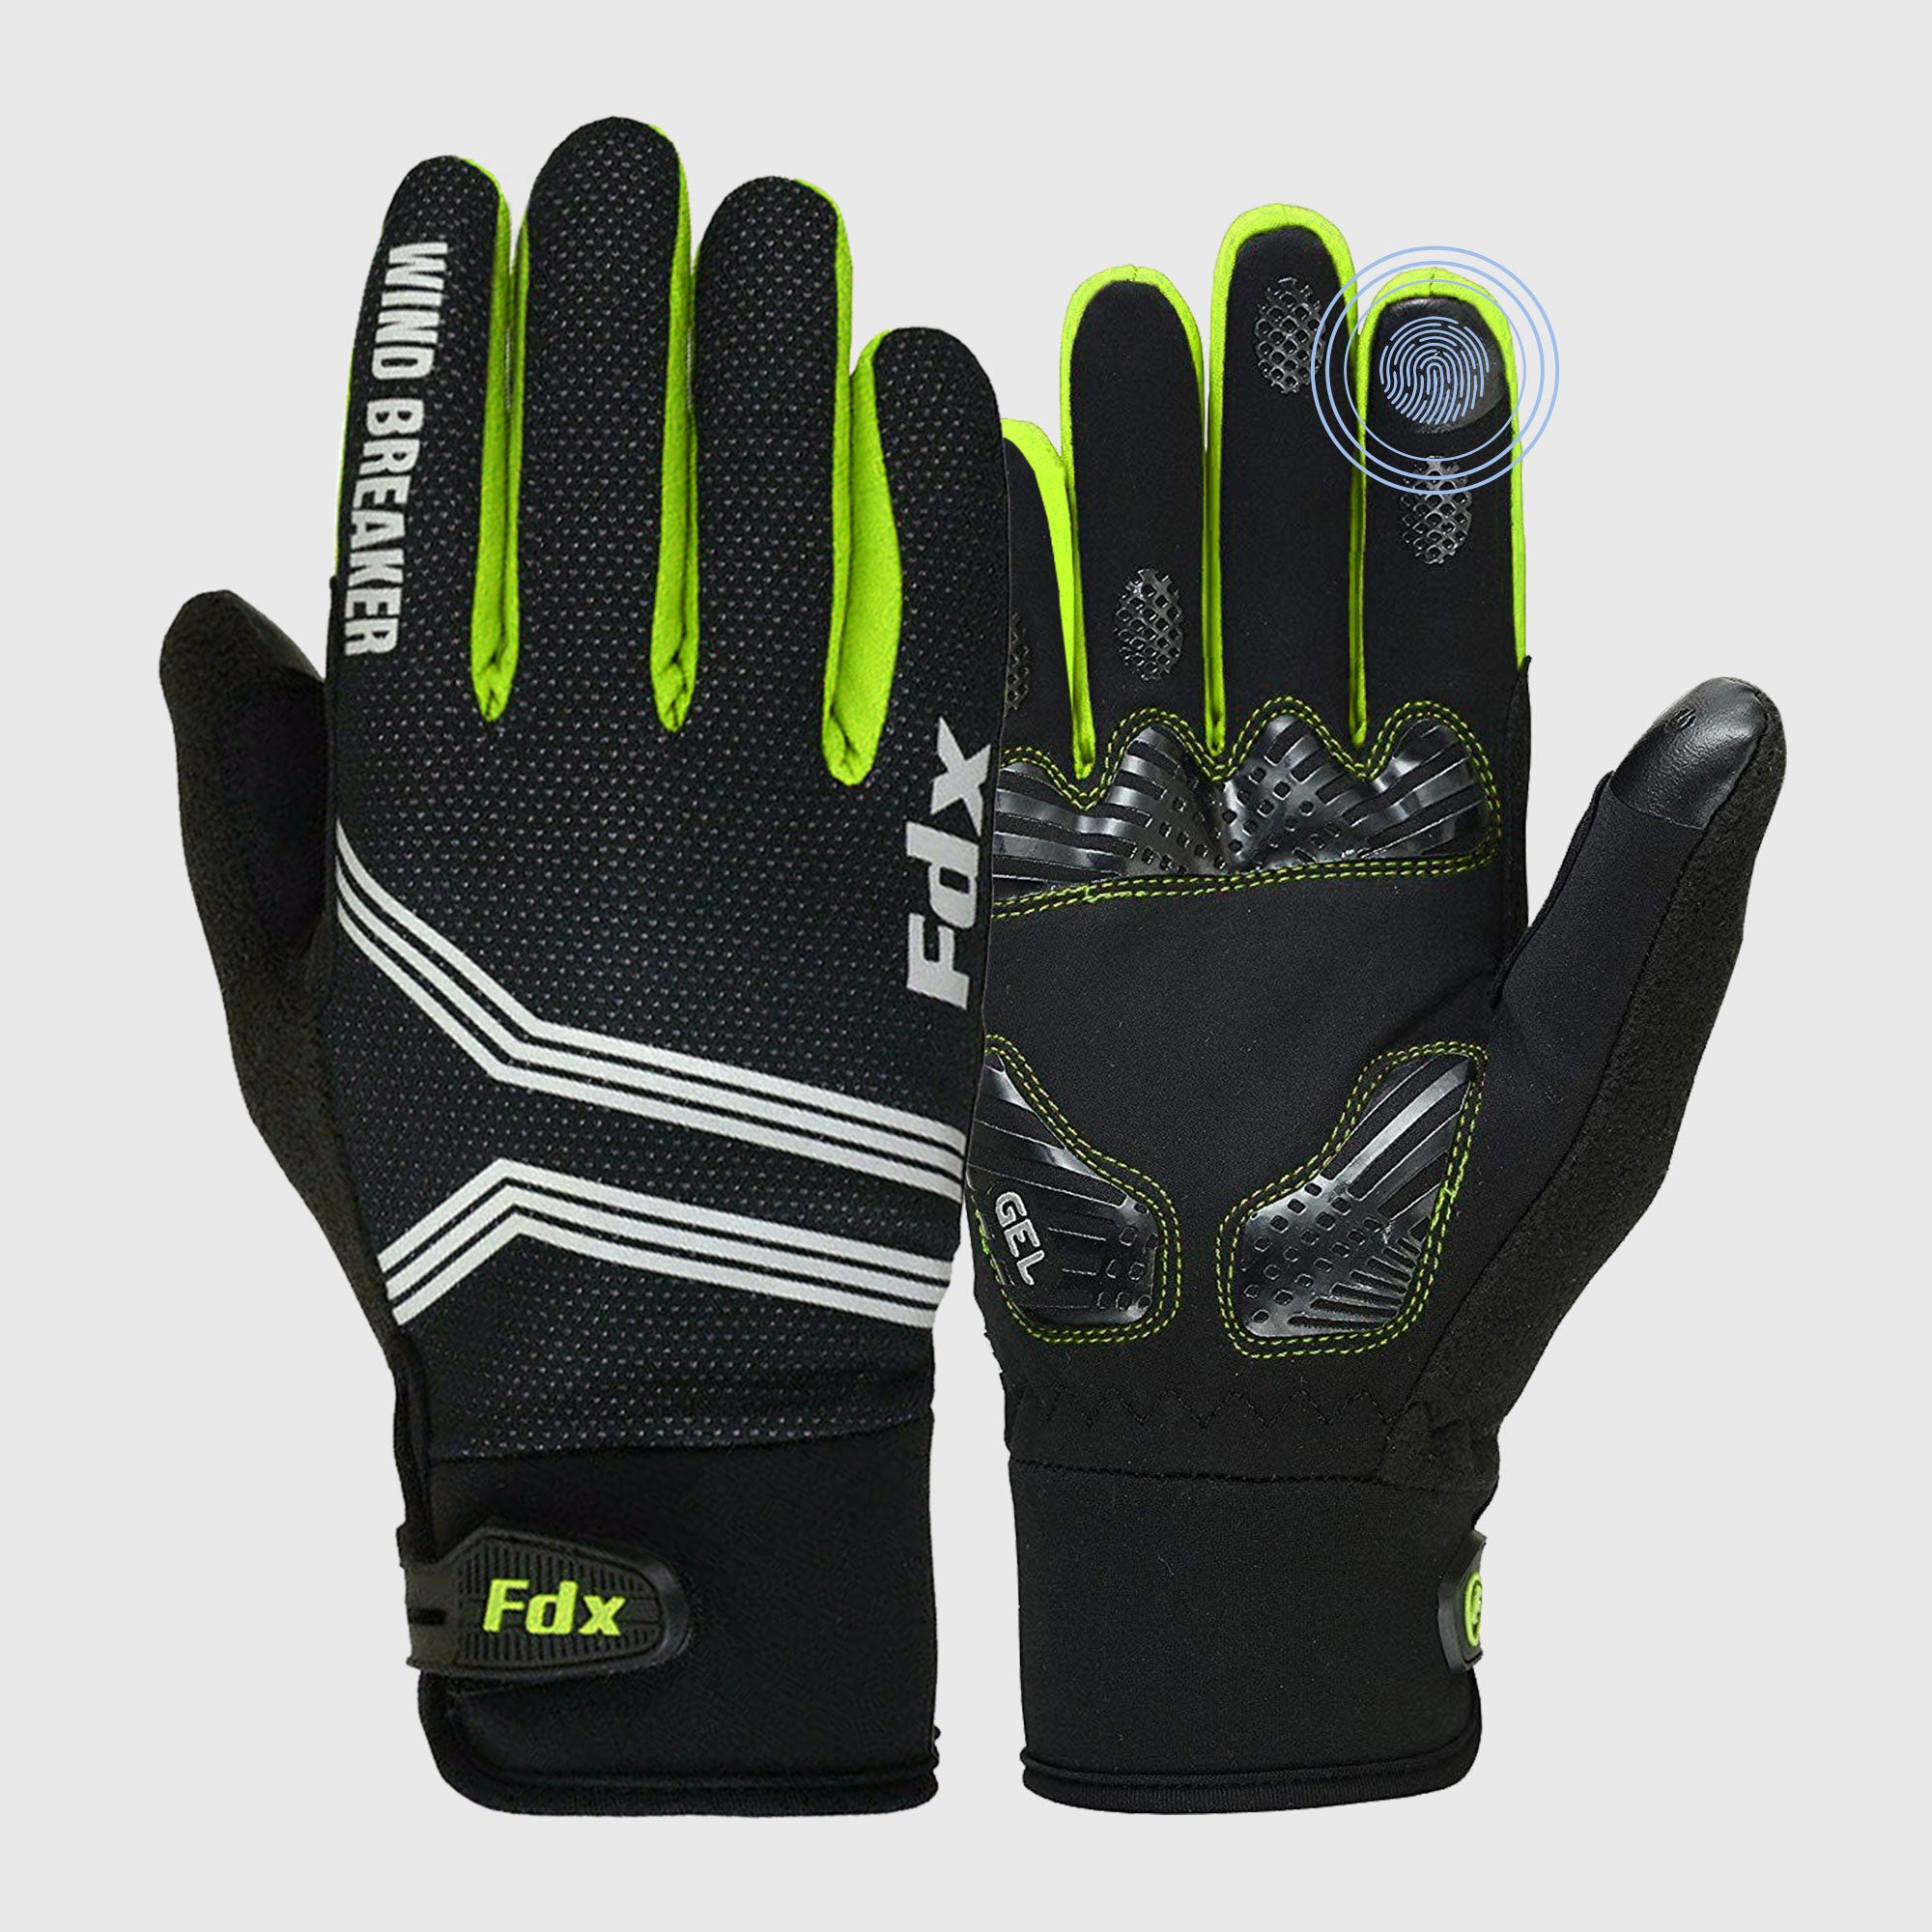 Fdx Dryrest Yellow Full Finger Gel Padded Winter Cycling Gloves